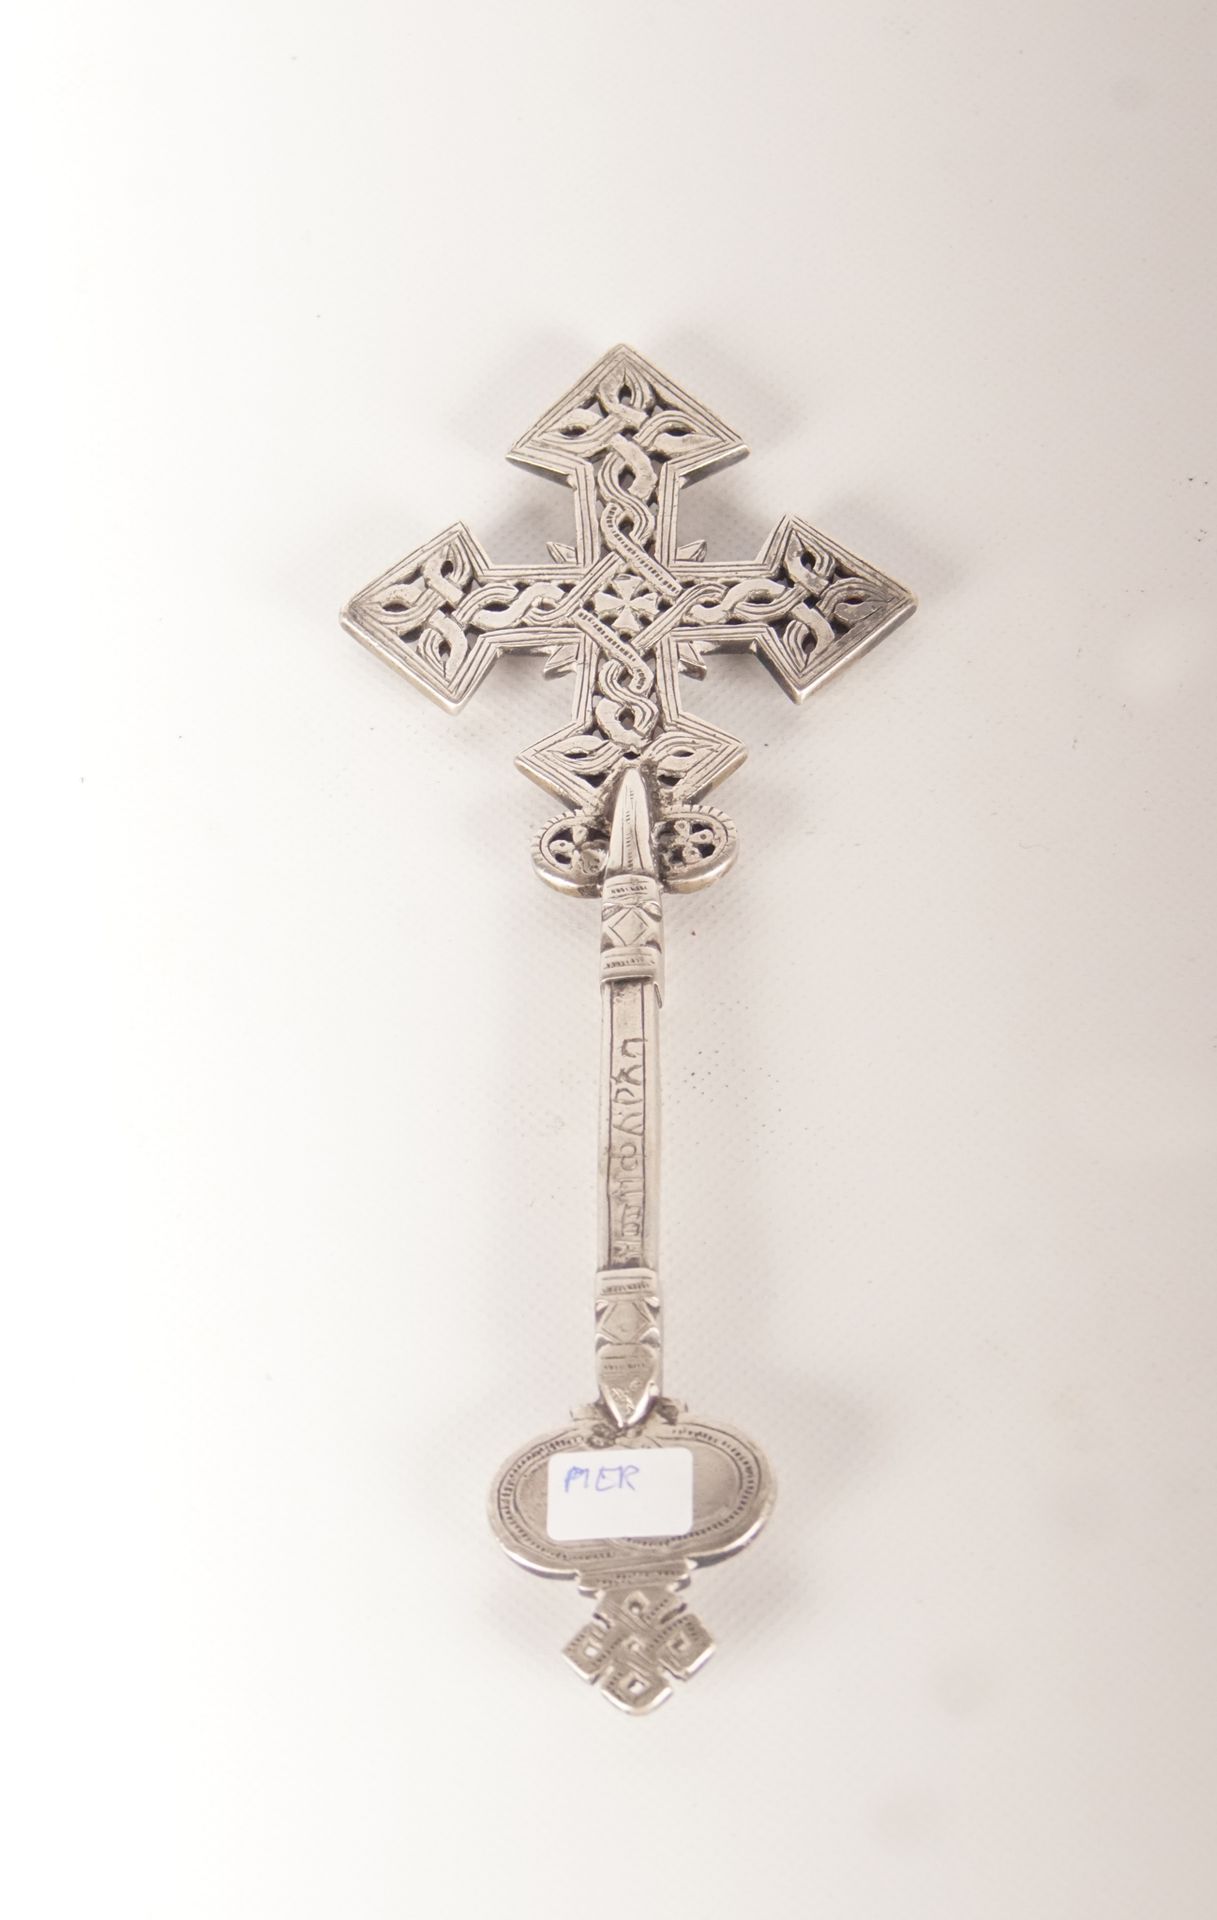 Ethiopia - Croix éthiopienne 刻有埃塞俄比亚文字的低矮银质十字架。无标记。 21.